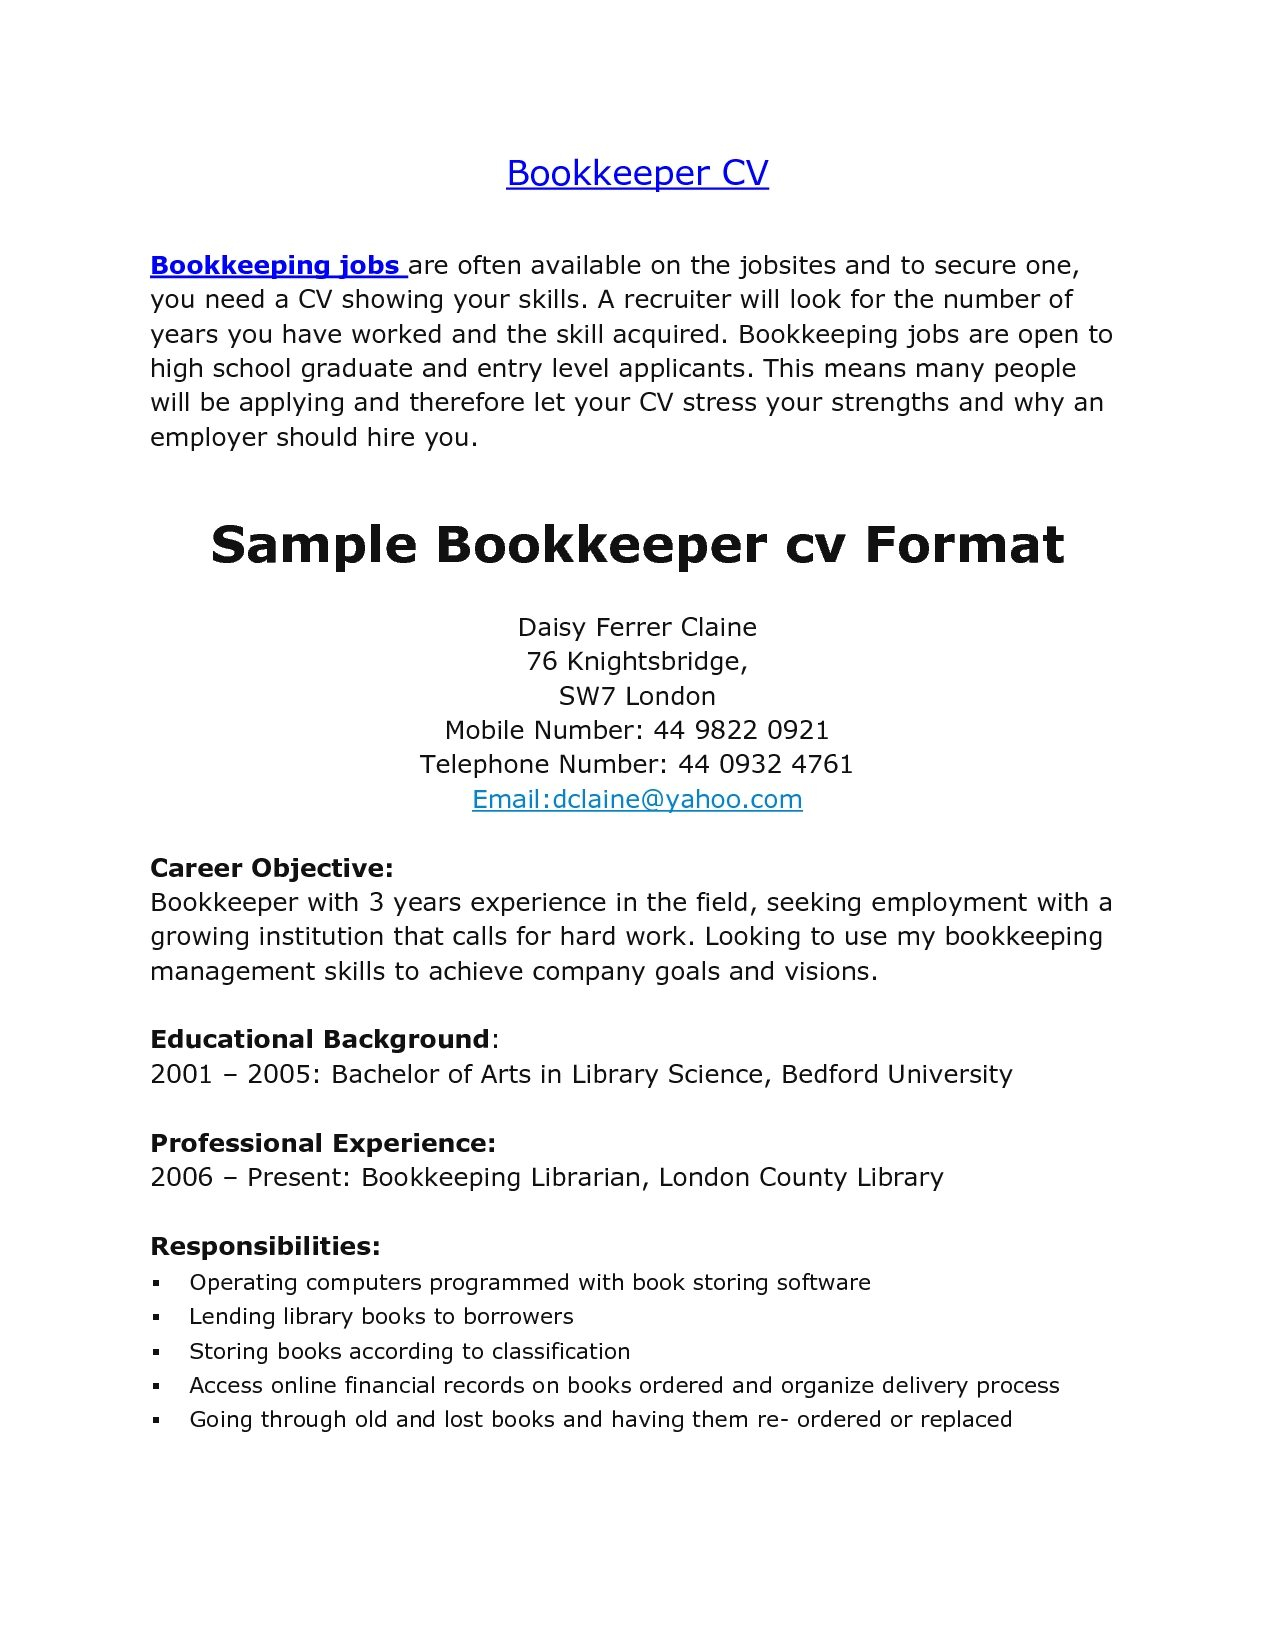 Bookkeeper Resume Samples | Nguonhangthoitrang and Bookkeeper Resume Sample Summary